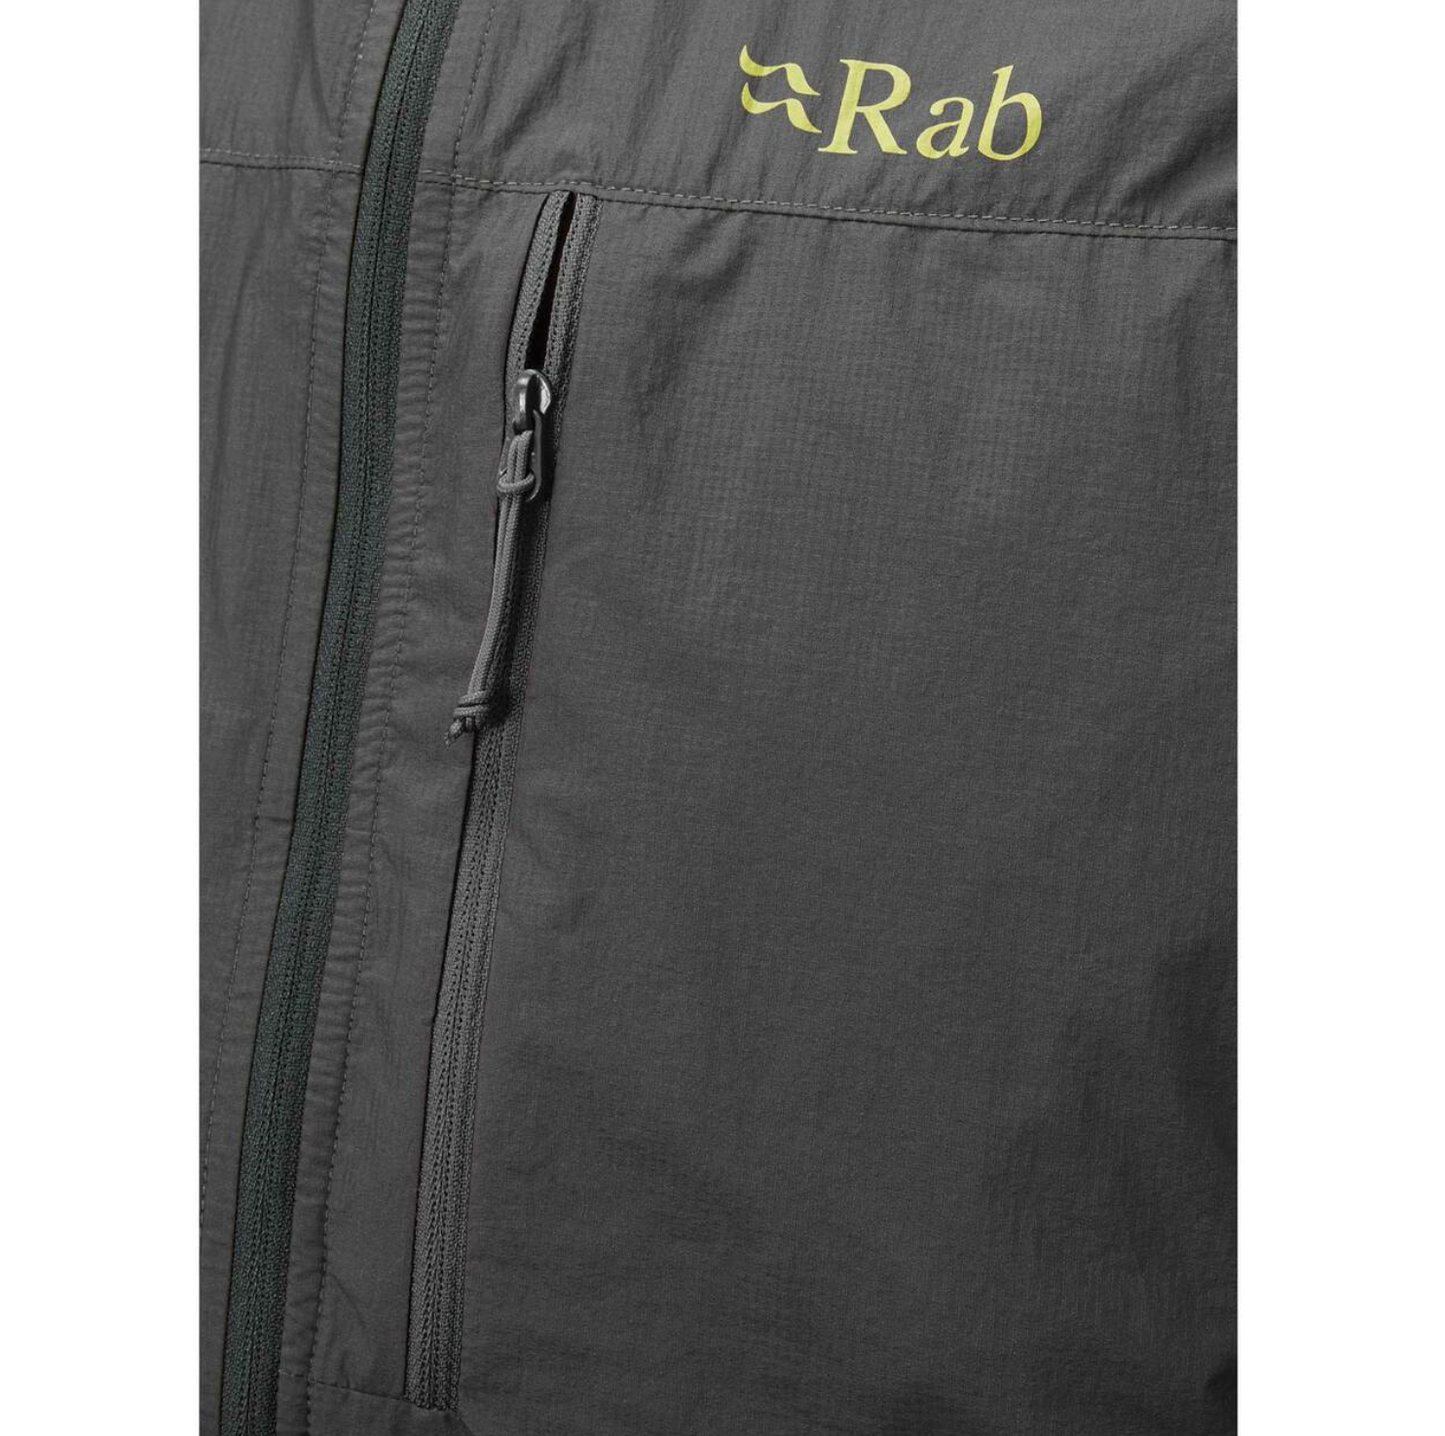 Rab(ラブ) Men's Vital Jacket QWS-49